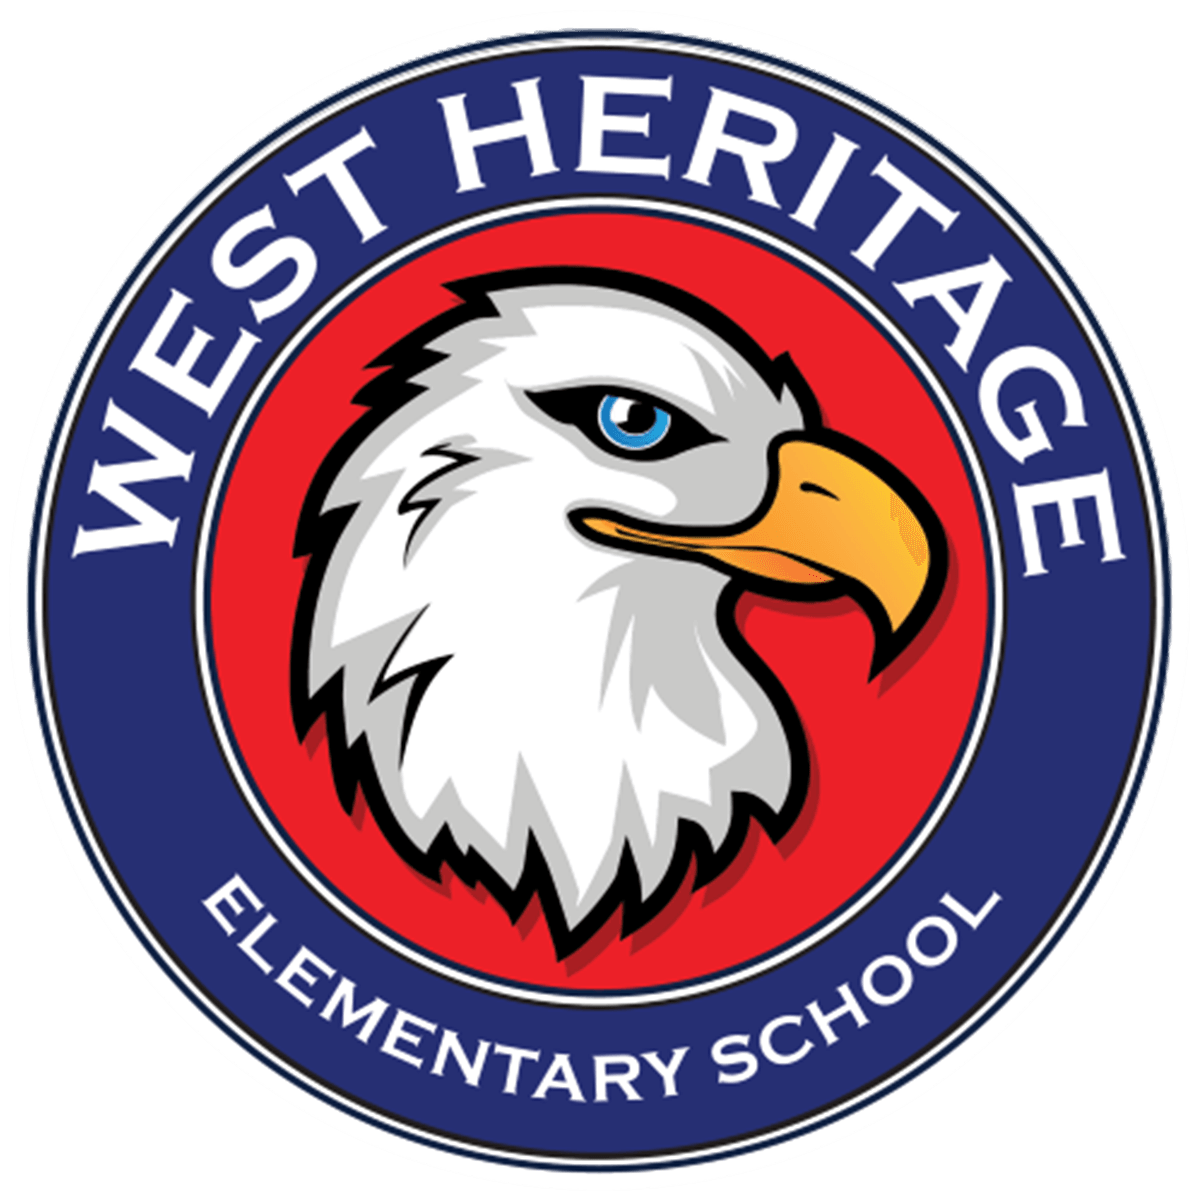 West Heritage Elementary School